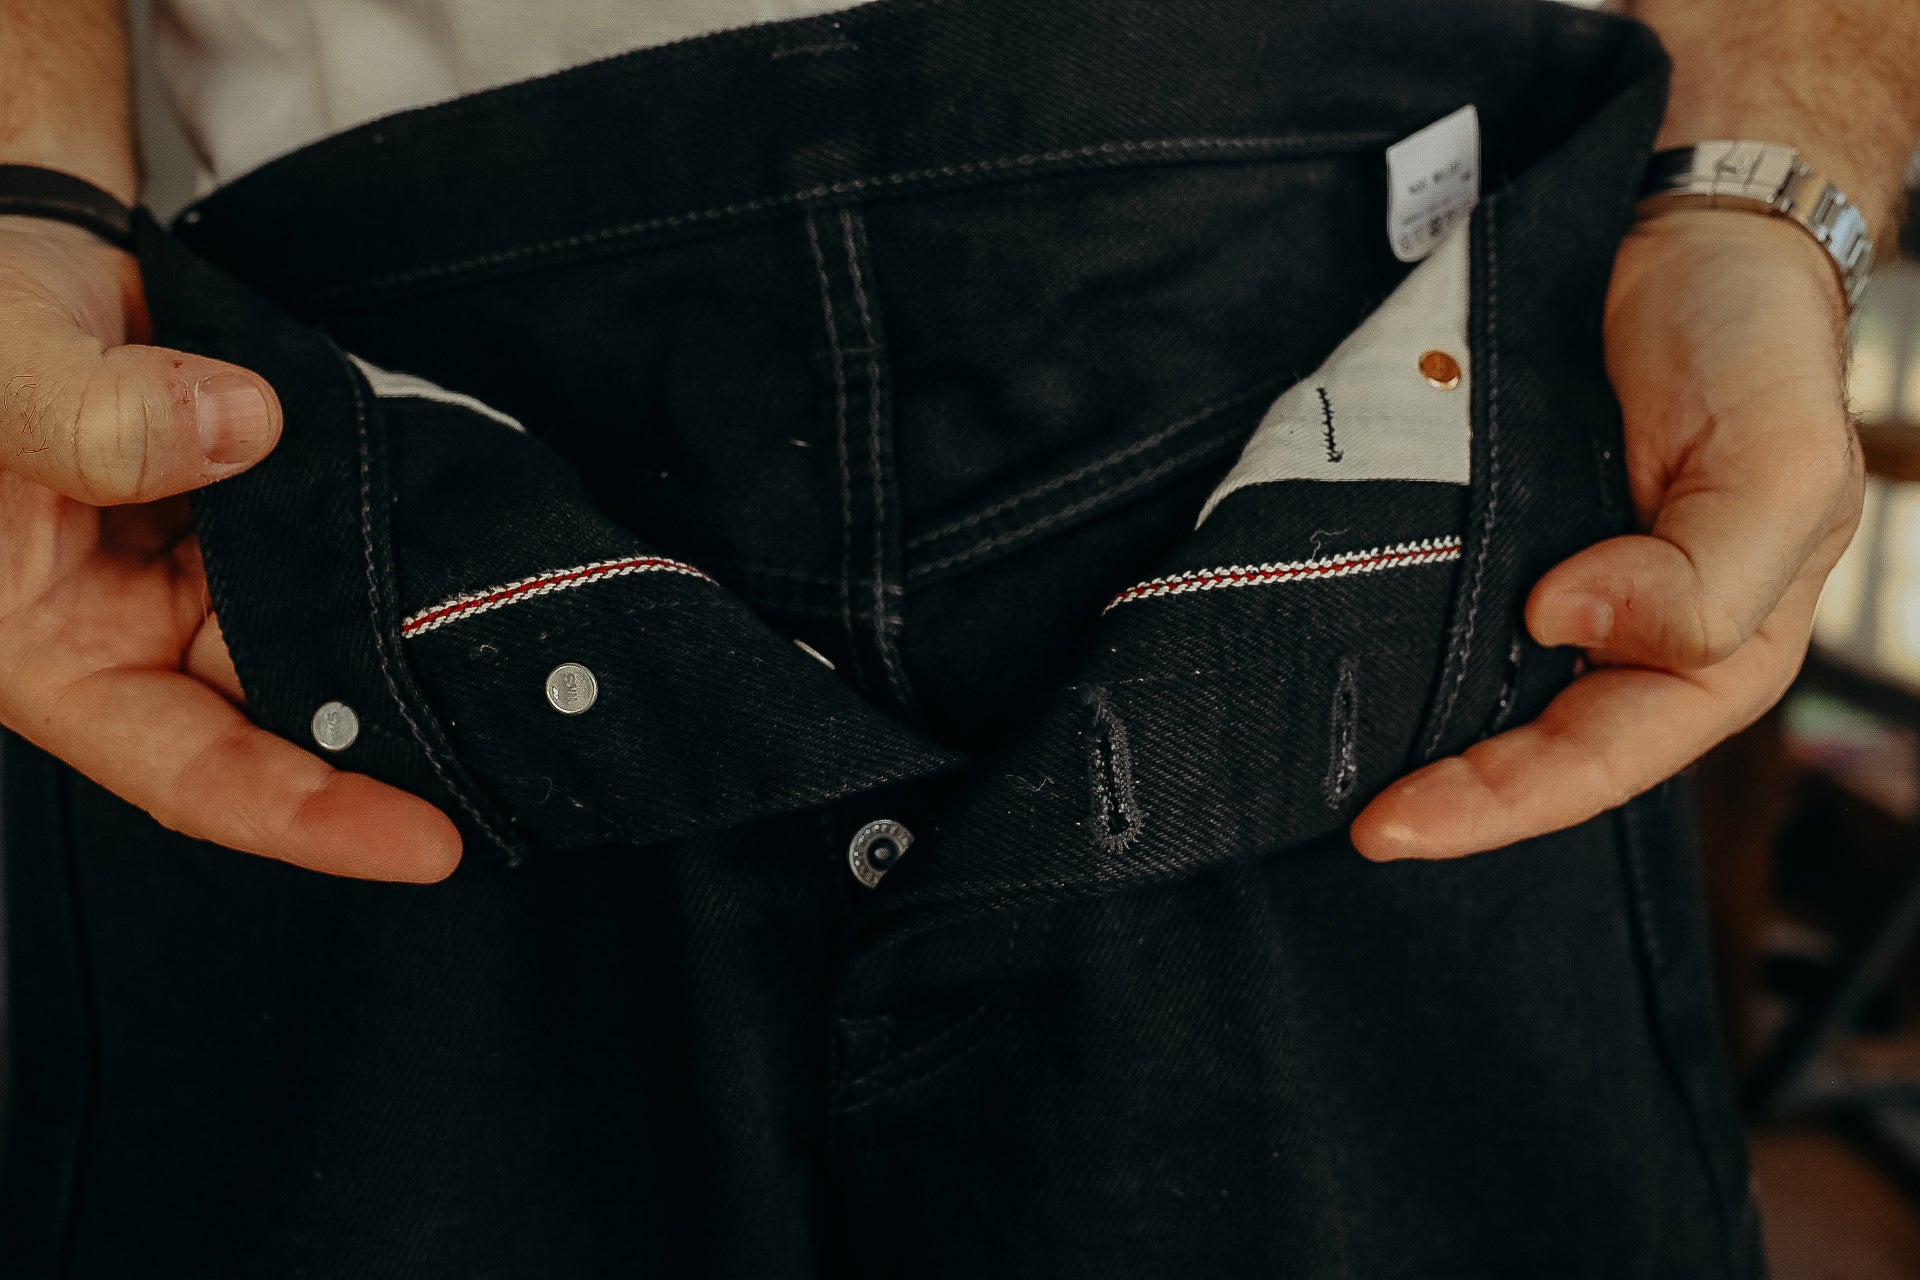 666 21oz Selvedge Denim Slim Straight Cut Jeans - Superblack (Fades To Grey)